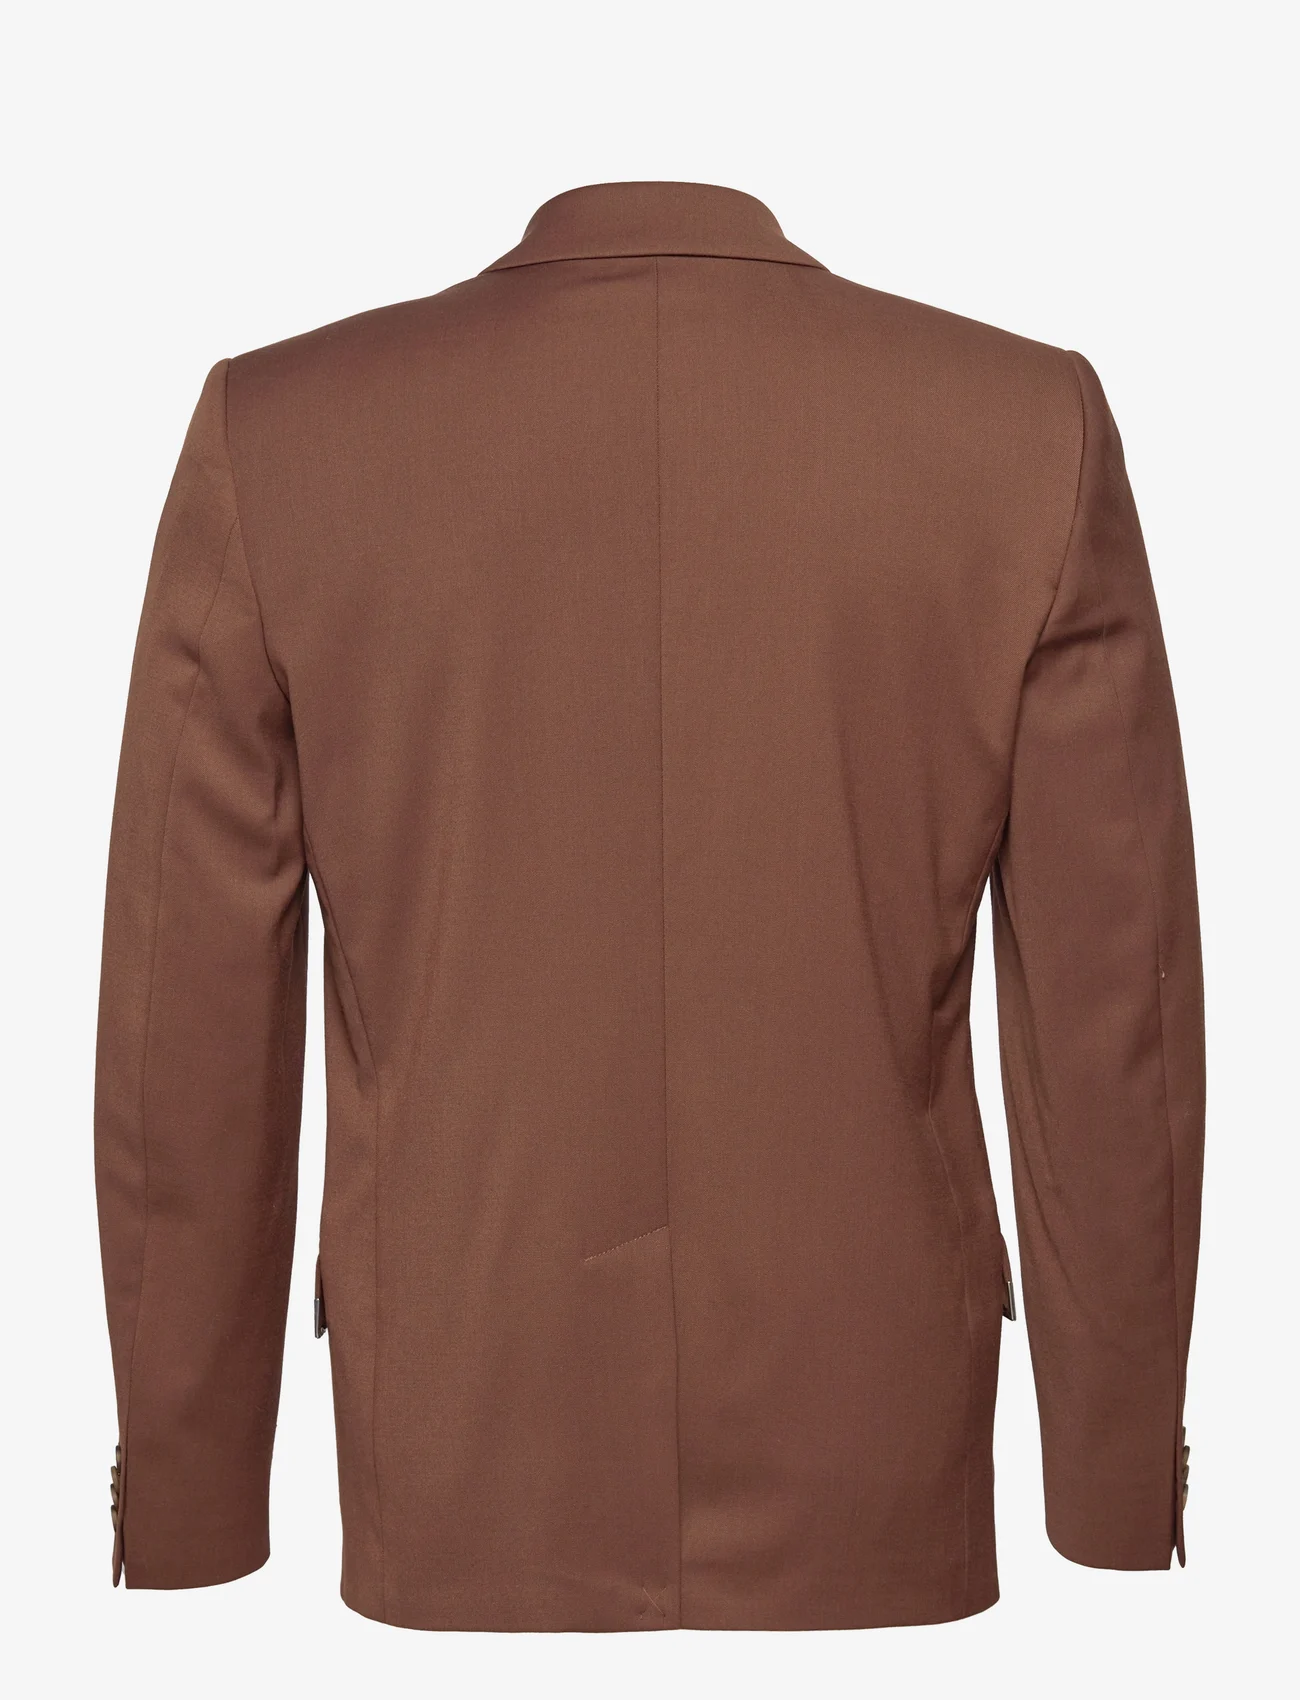 HAN Kjøbenhavn - Single Suit Blazer - Žaketes ar divrindu pogājumu - brown - 1